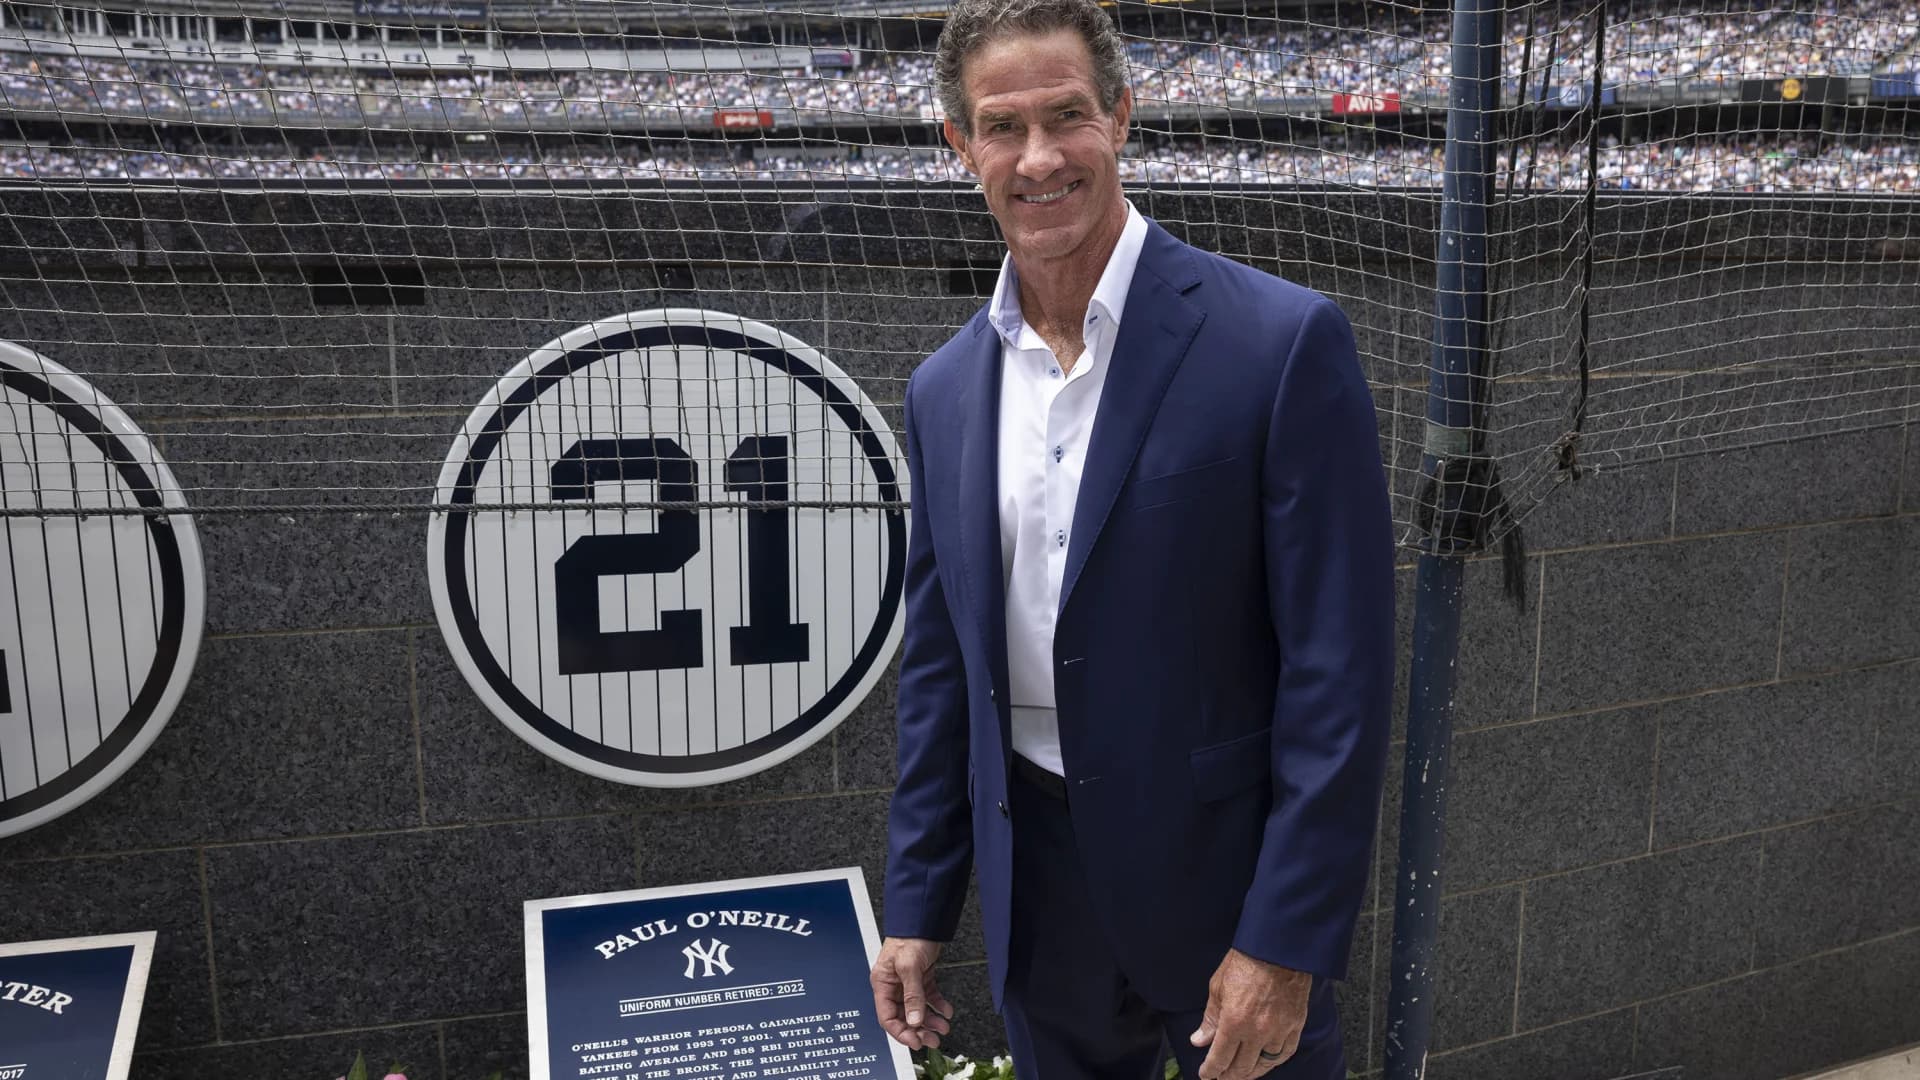 Yankees retire Paul O’Neill’s No. 21 jersey, Cashman booed